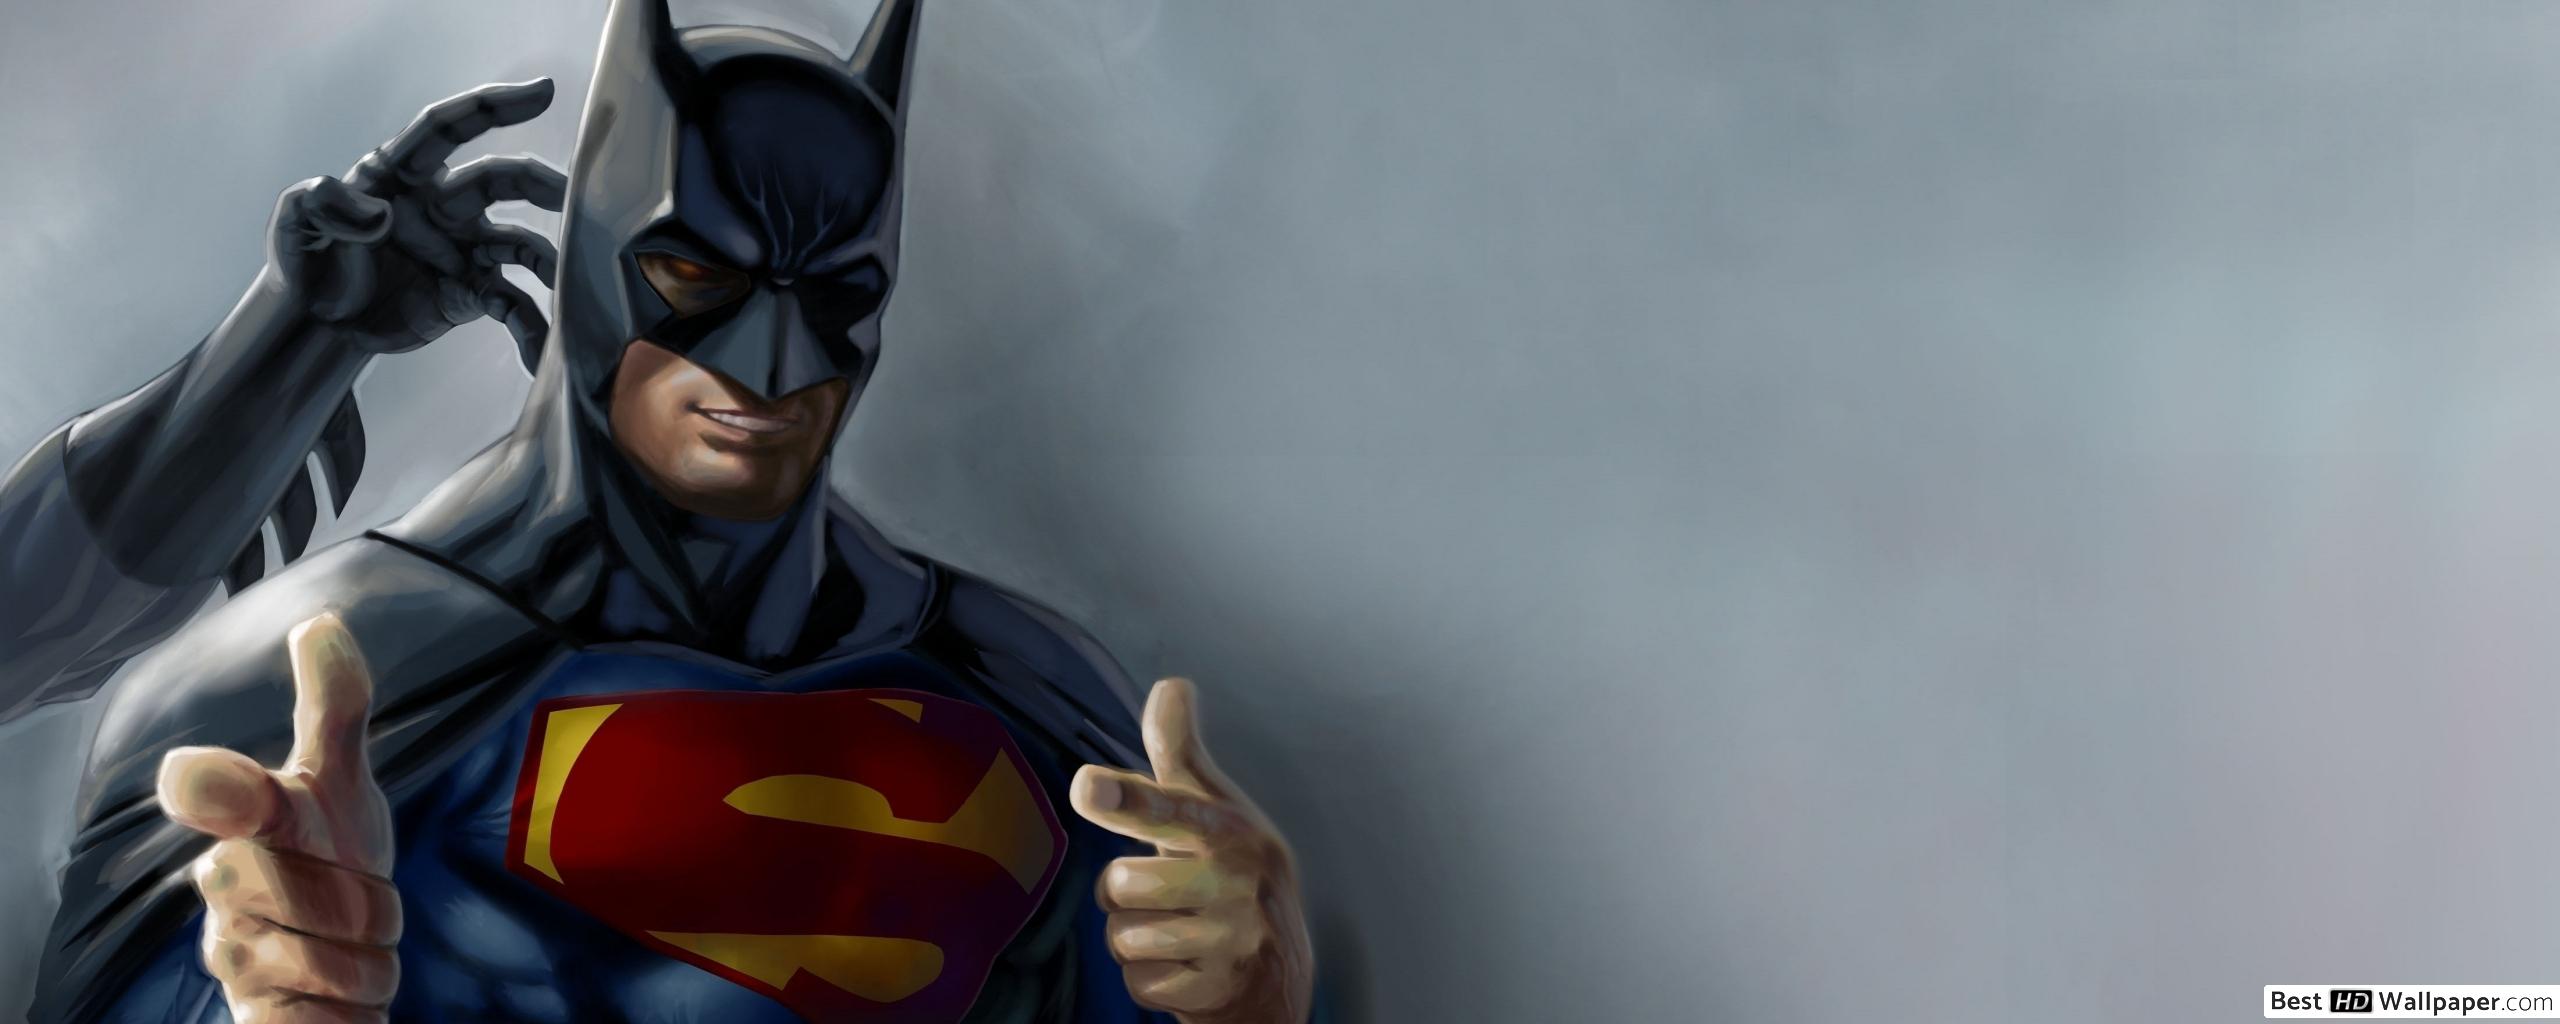 Superman In Batman Mask - HD Wallpaper 